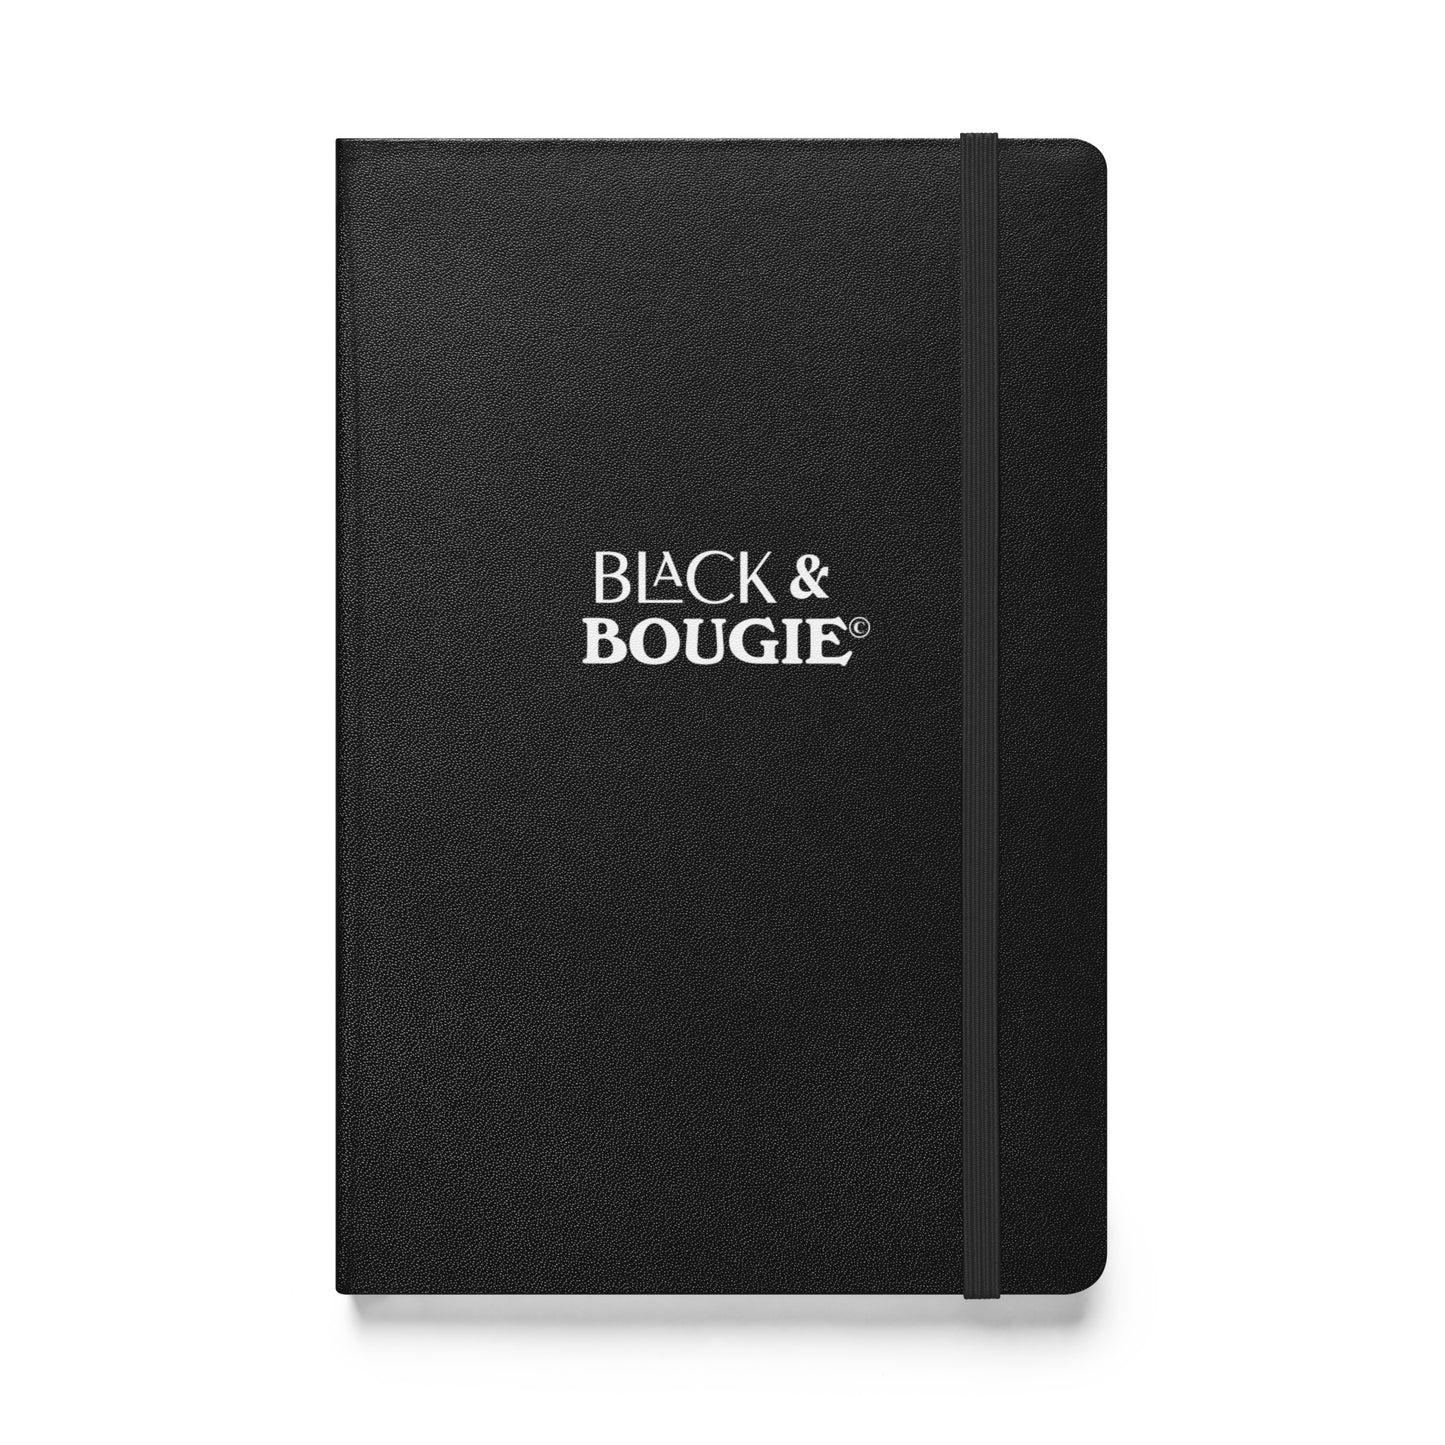 Black & Bougie Hardcover bound notebook